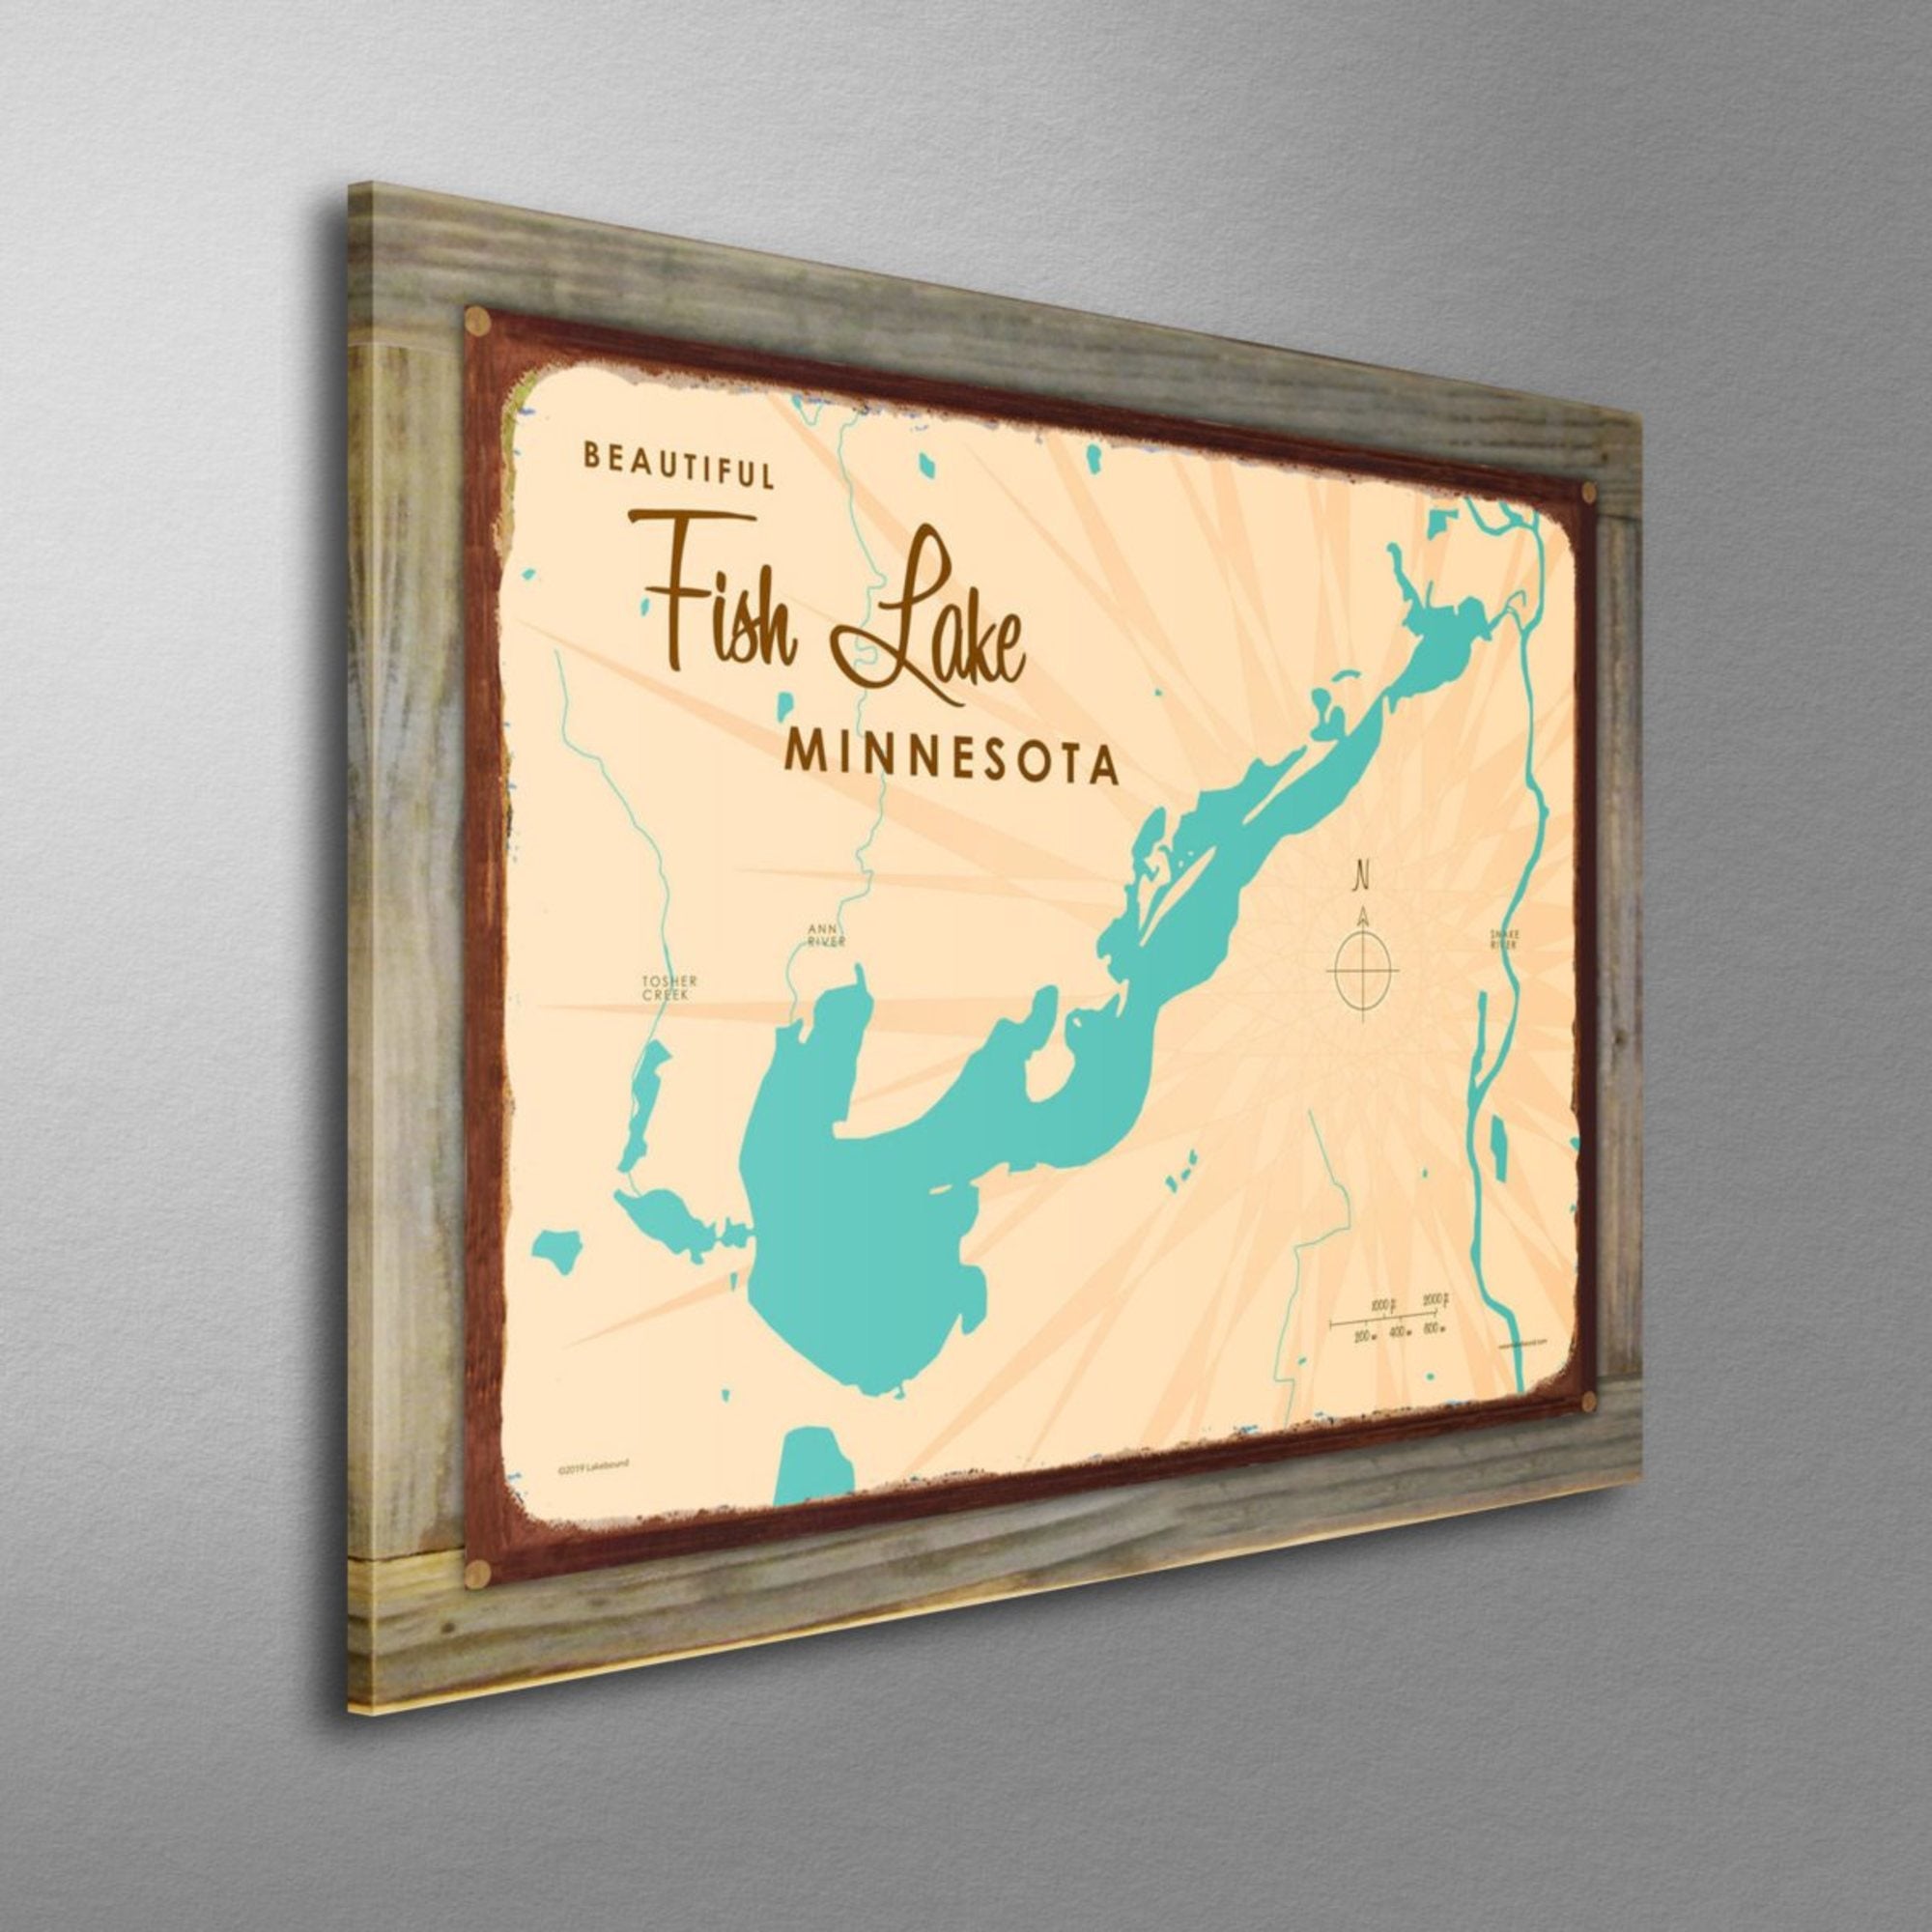 Fish Lake Minnesota, Wood-Mounted Rustic Metal Sign Map Art